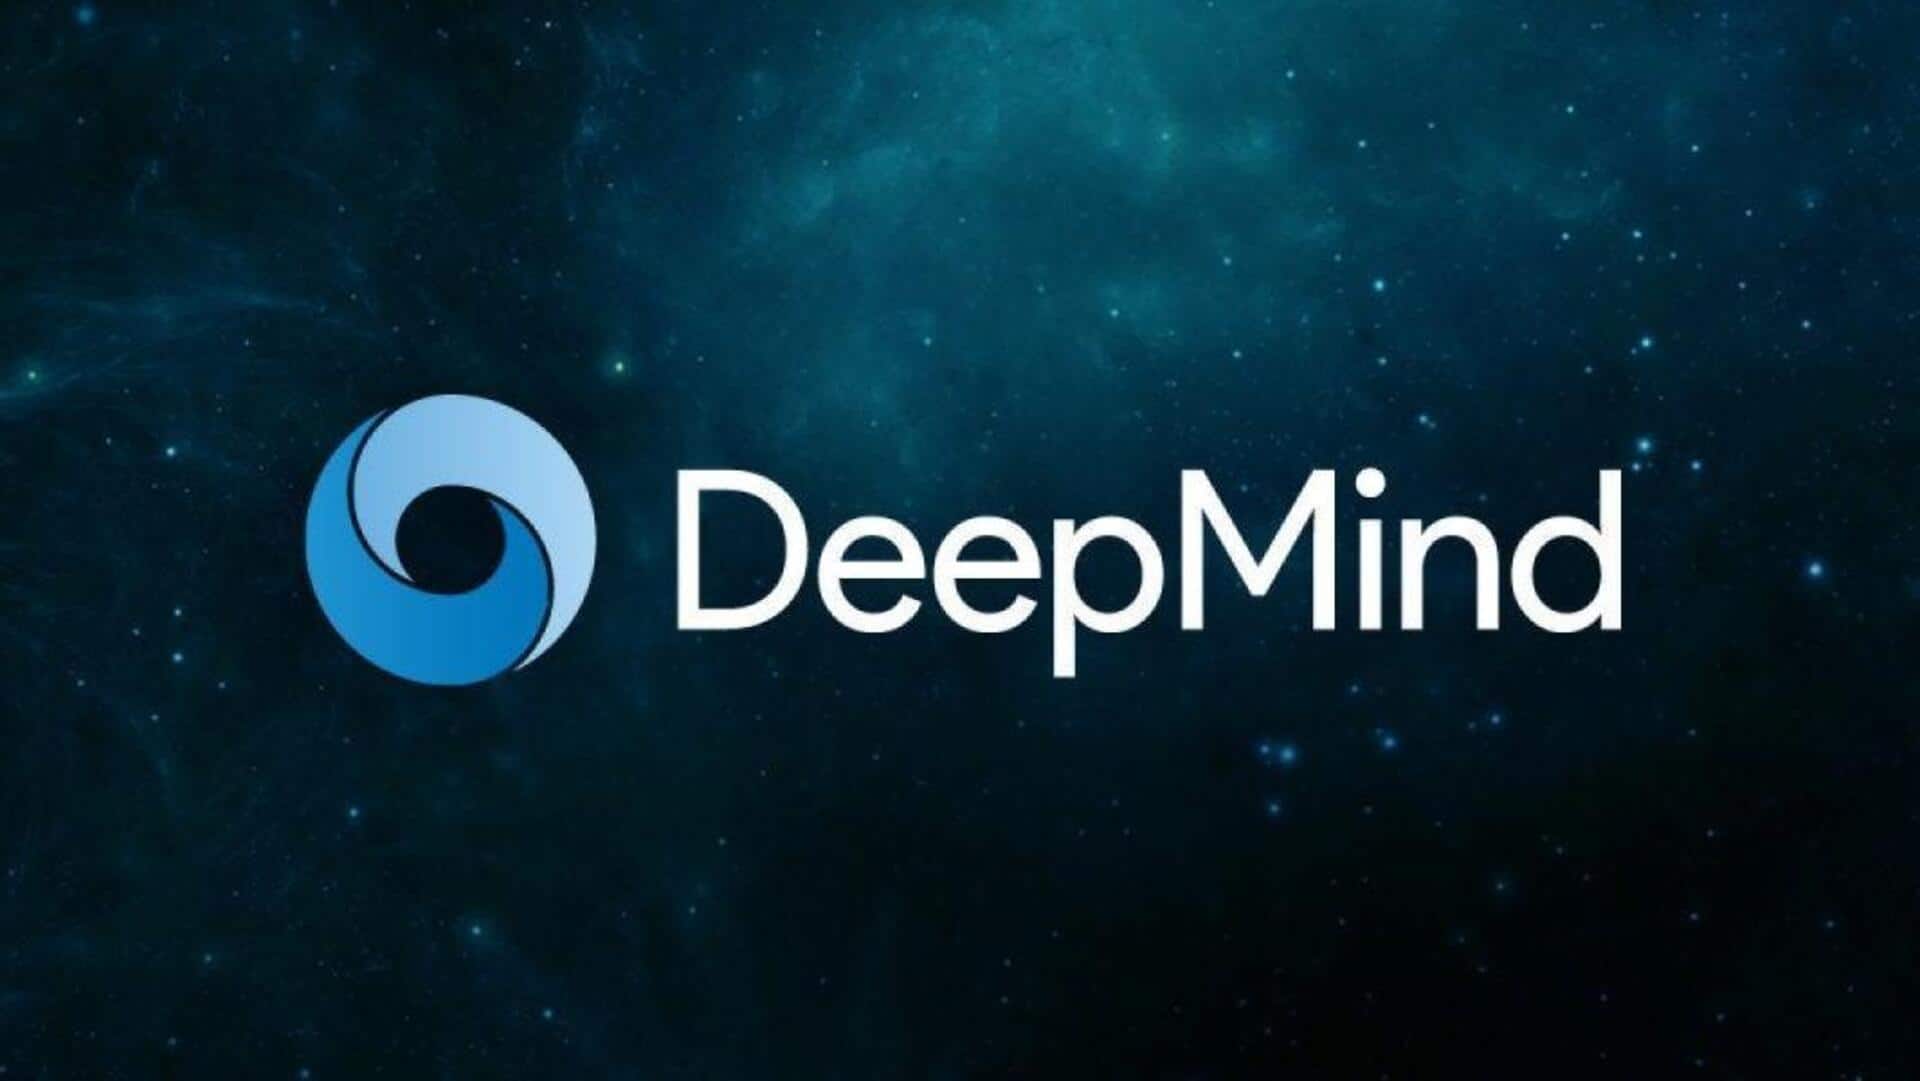 Google DeepMind's new AI tool creates soundtracks using text prompts